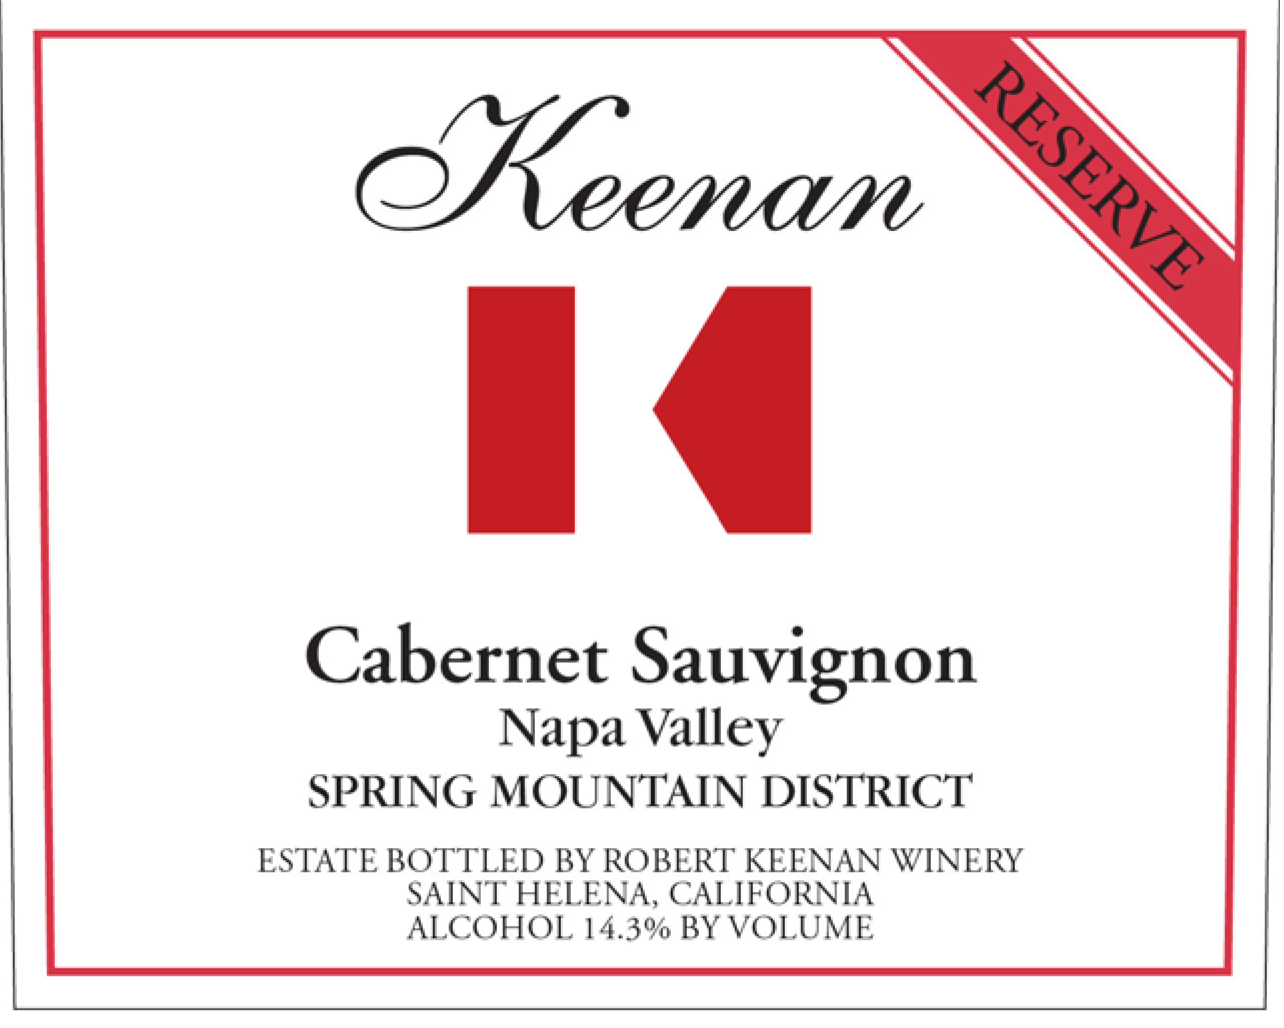 Keenan - Cabernet Sauvignon Reserve label